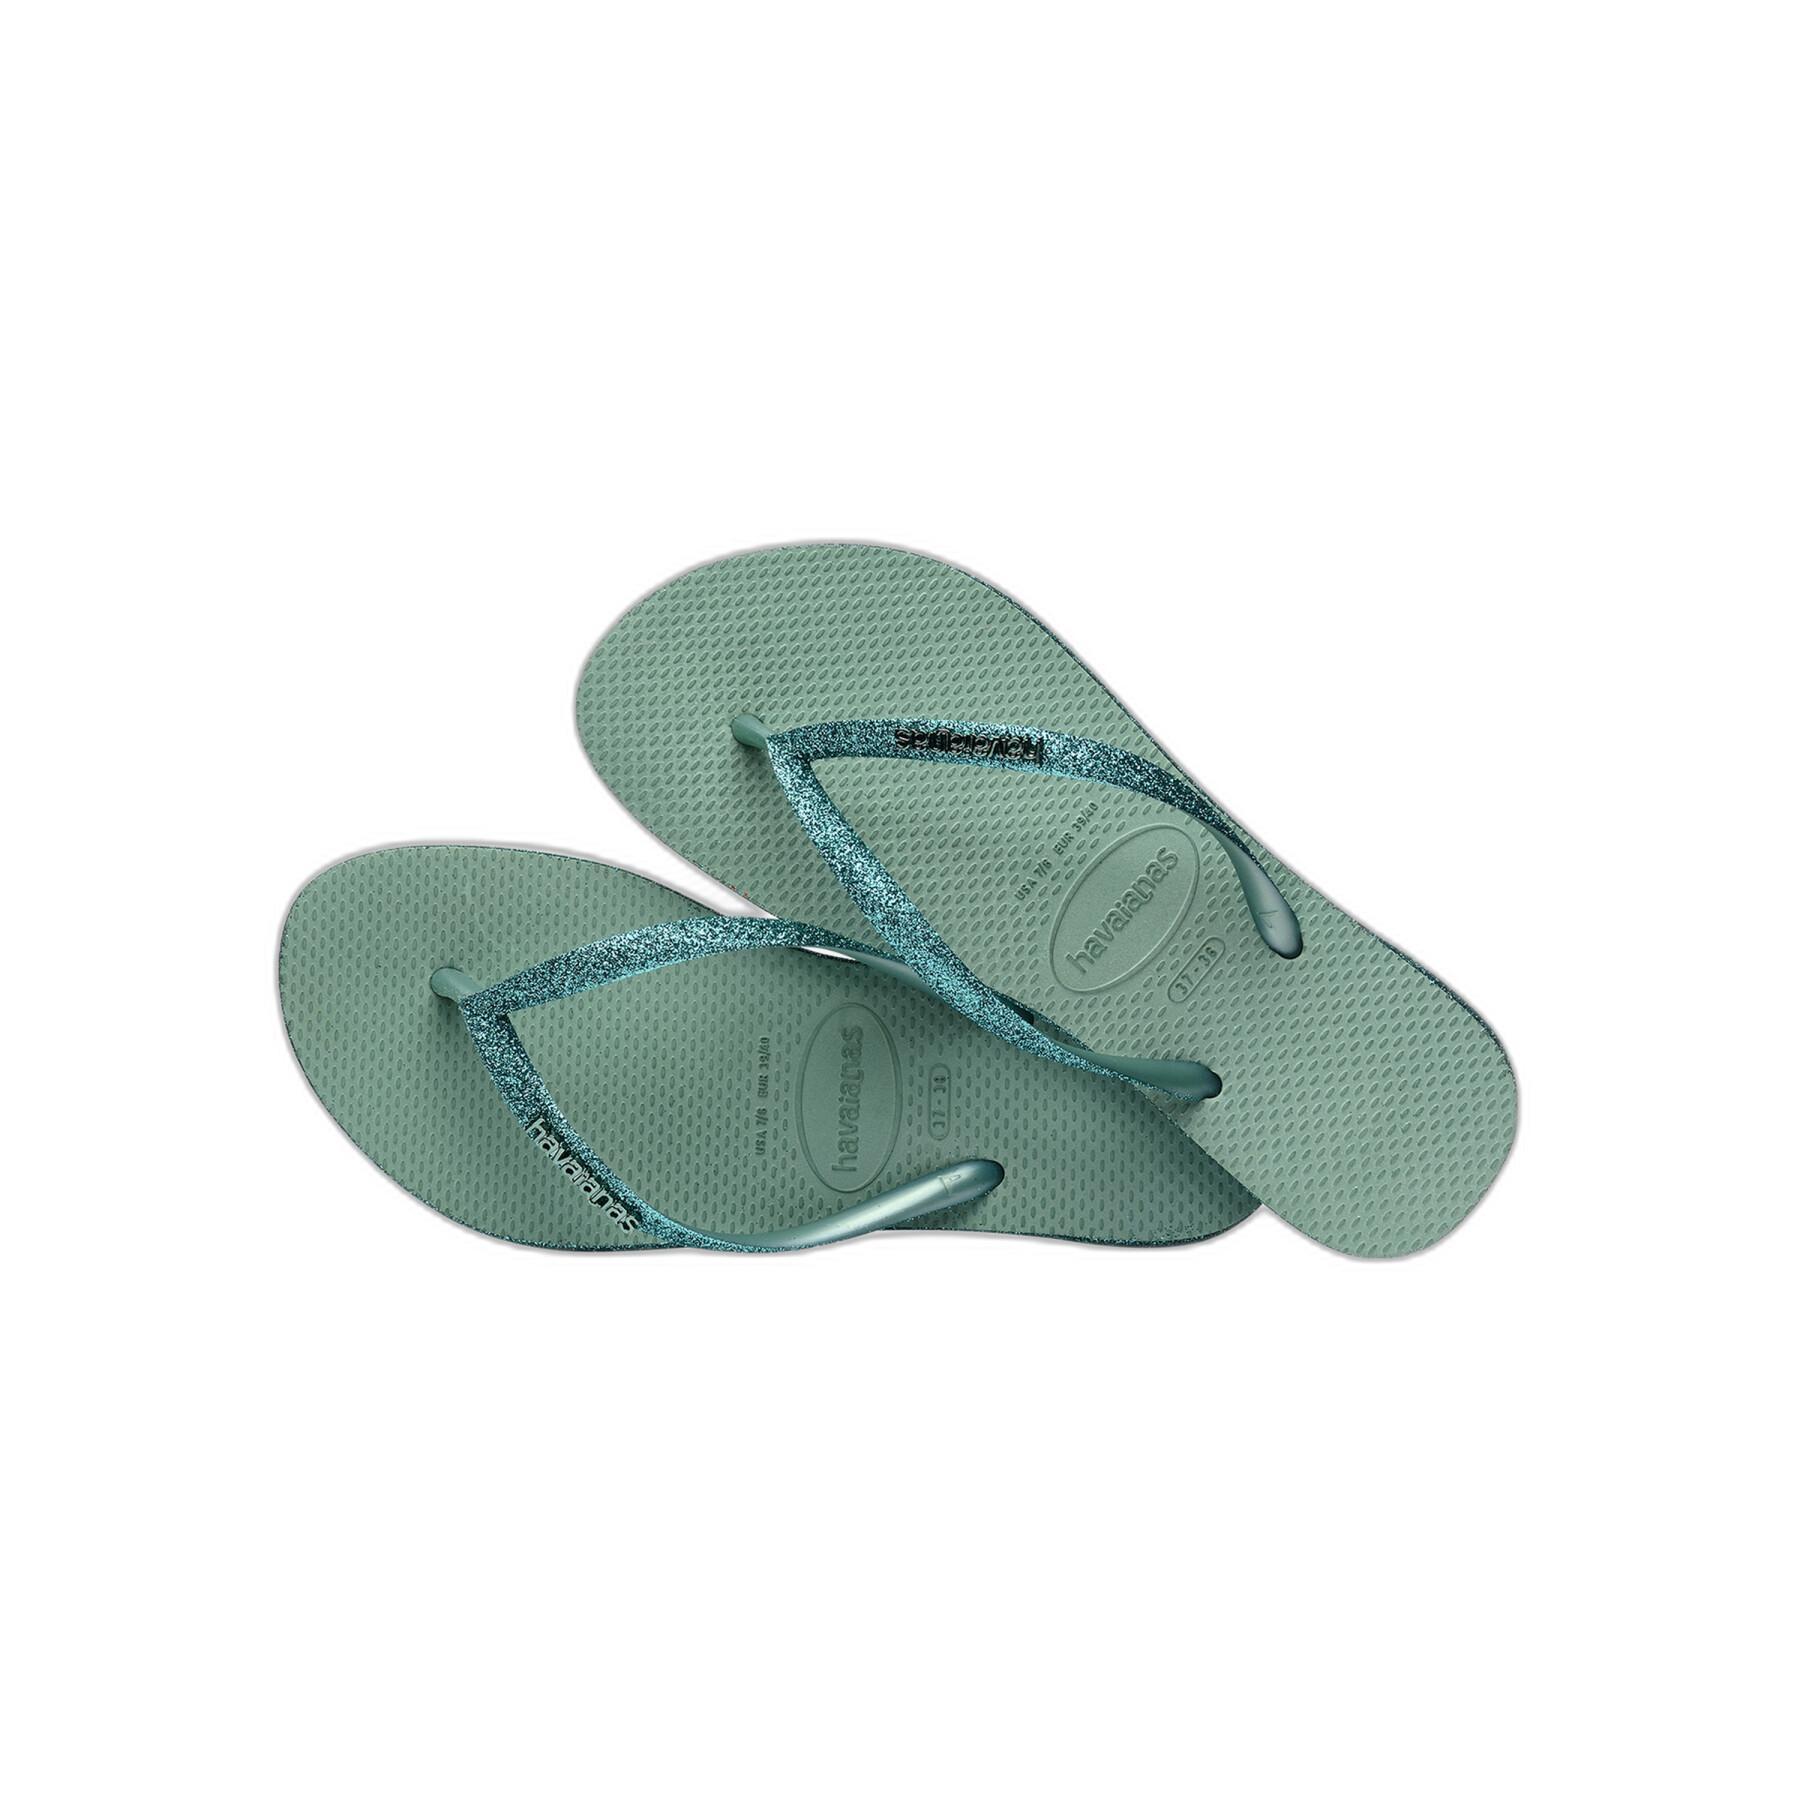 Sandaler för kvinnor Havaianas Slim Sparkle II